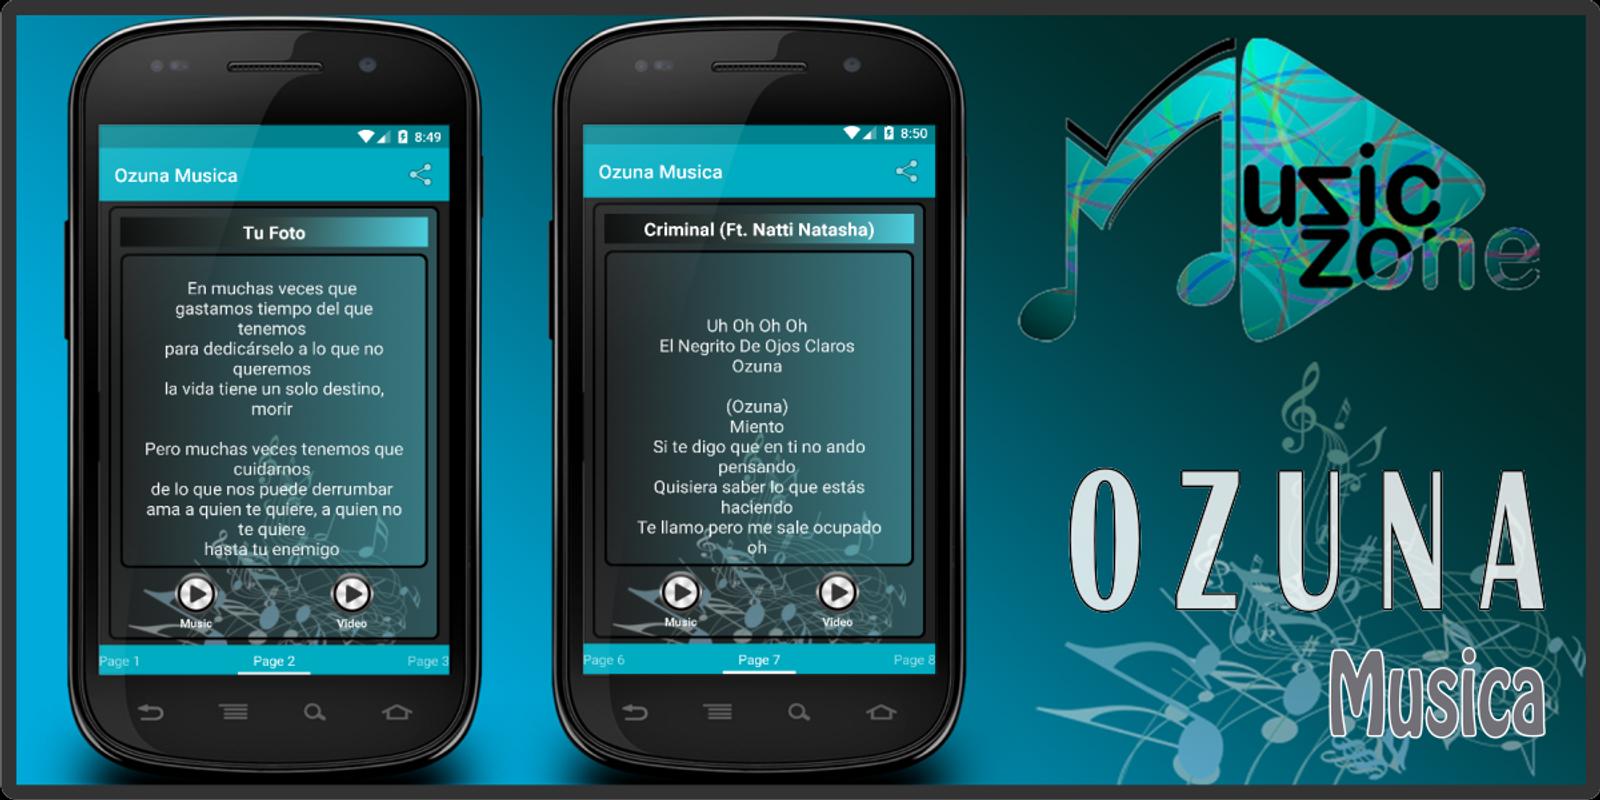 Musica de Ozuna for Android - APK Download